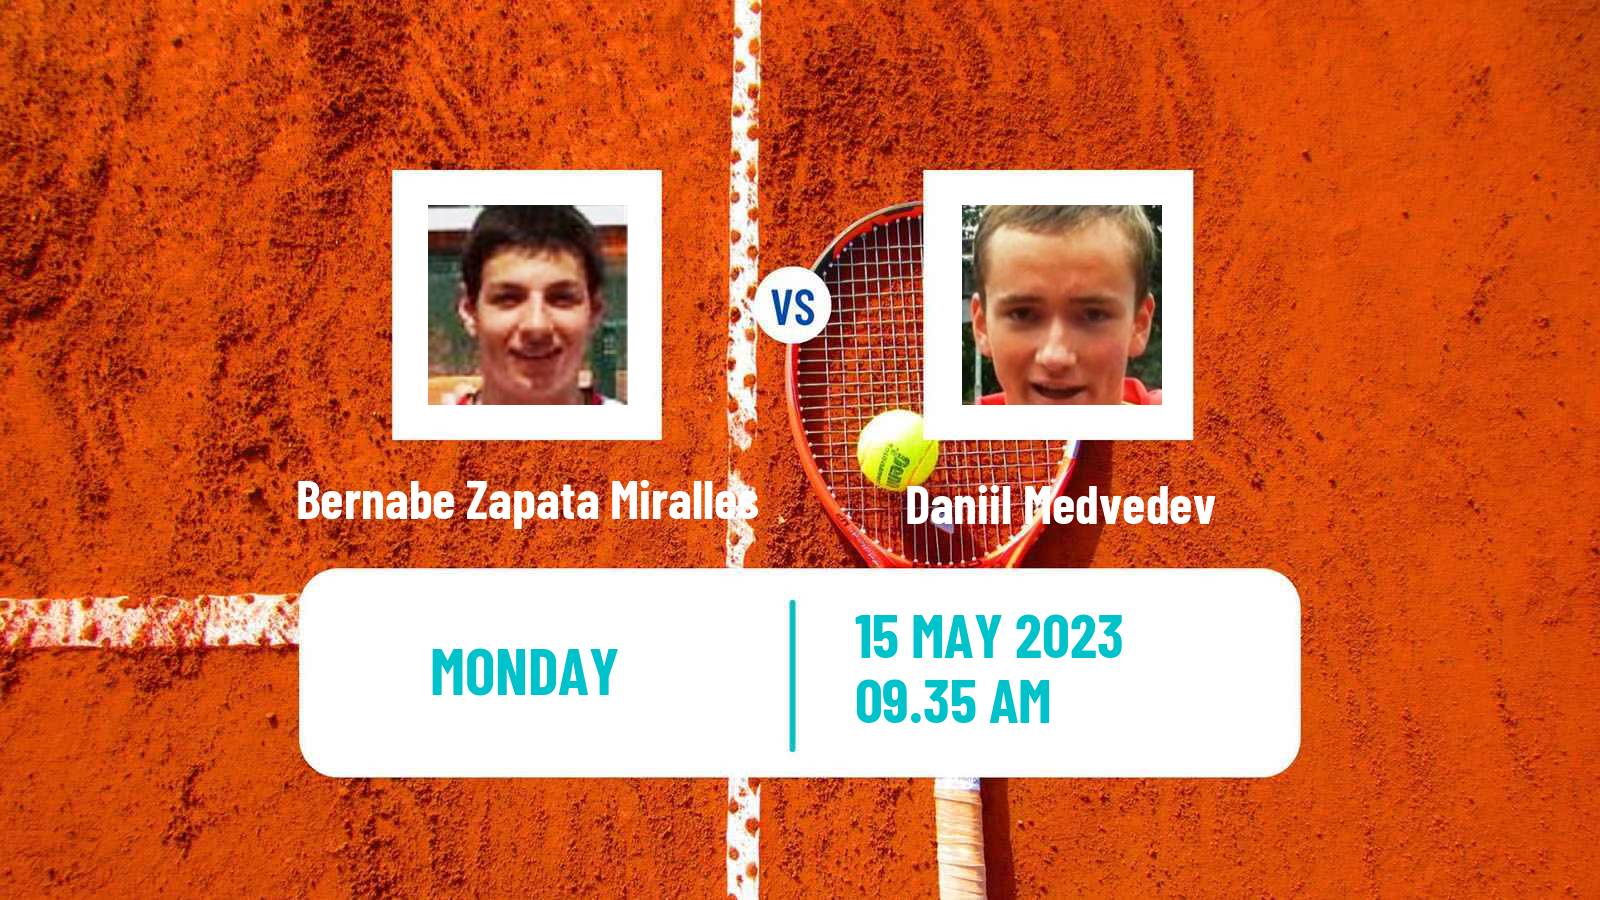 Tennis ATP Roma Bernabe Zapata Miralles - Daniil Medvedev